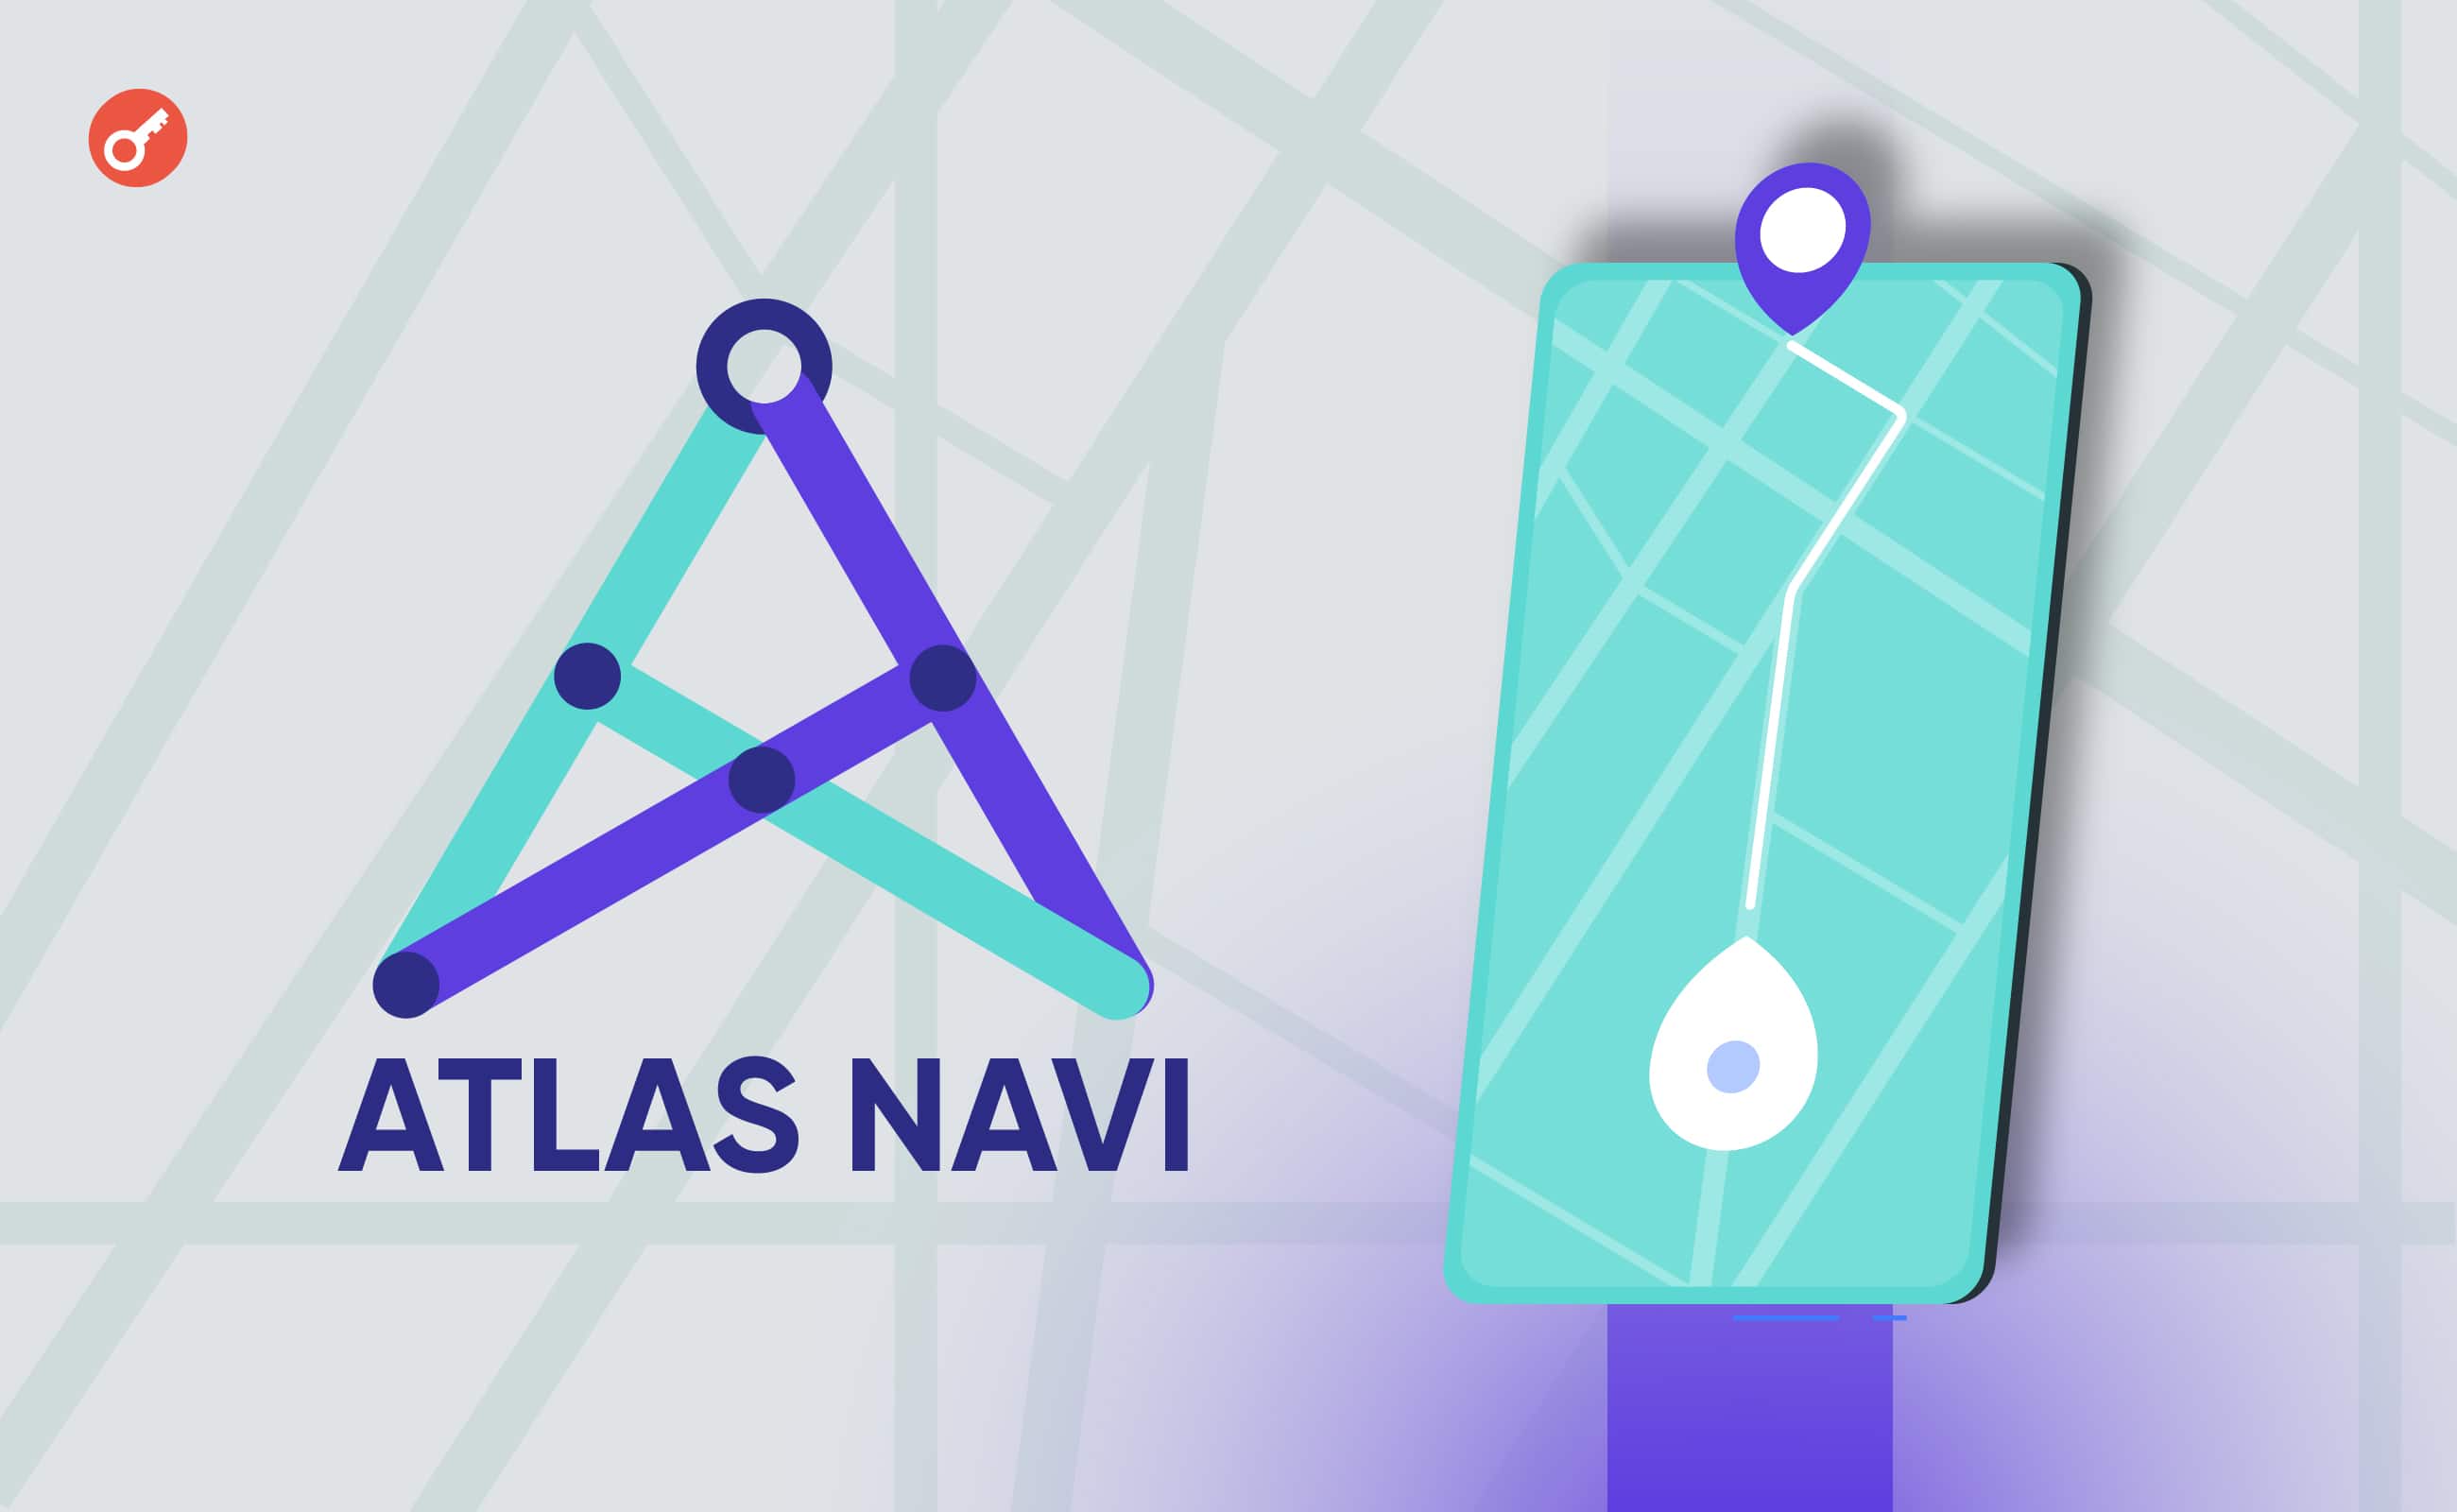 Atlas Navi has introduced an AI-app with a rewards and discounts program for drivers. Заглавный коллаж статьи.